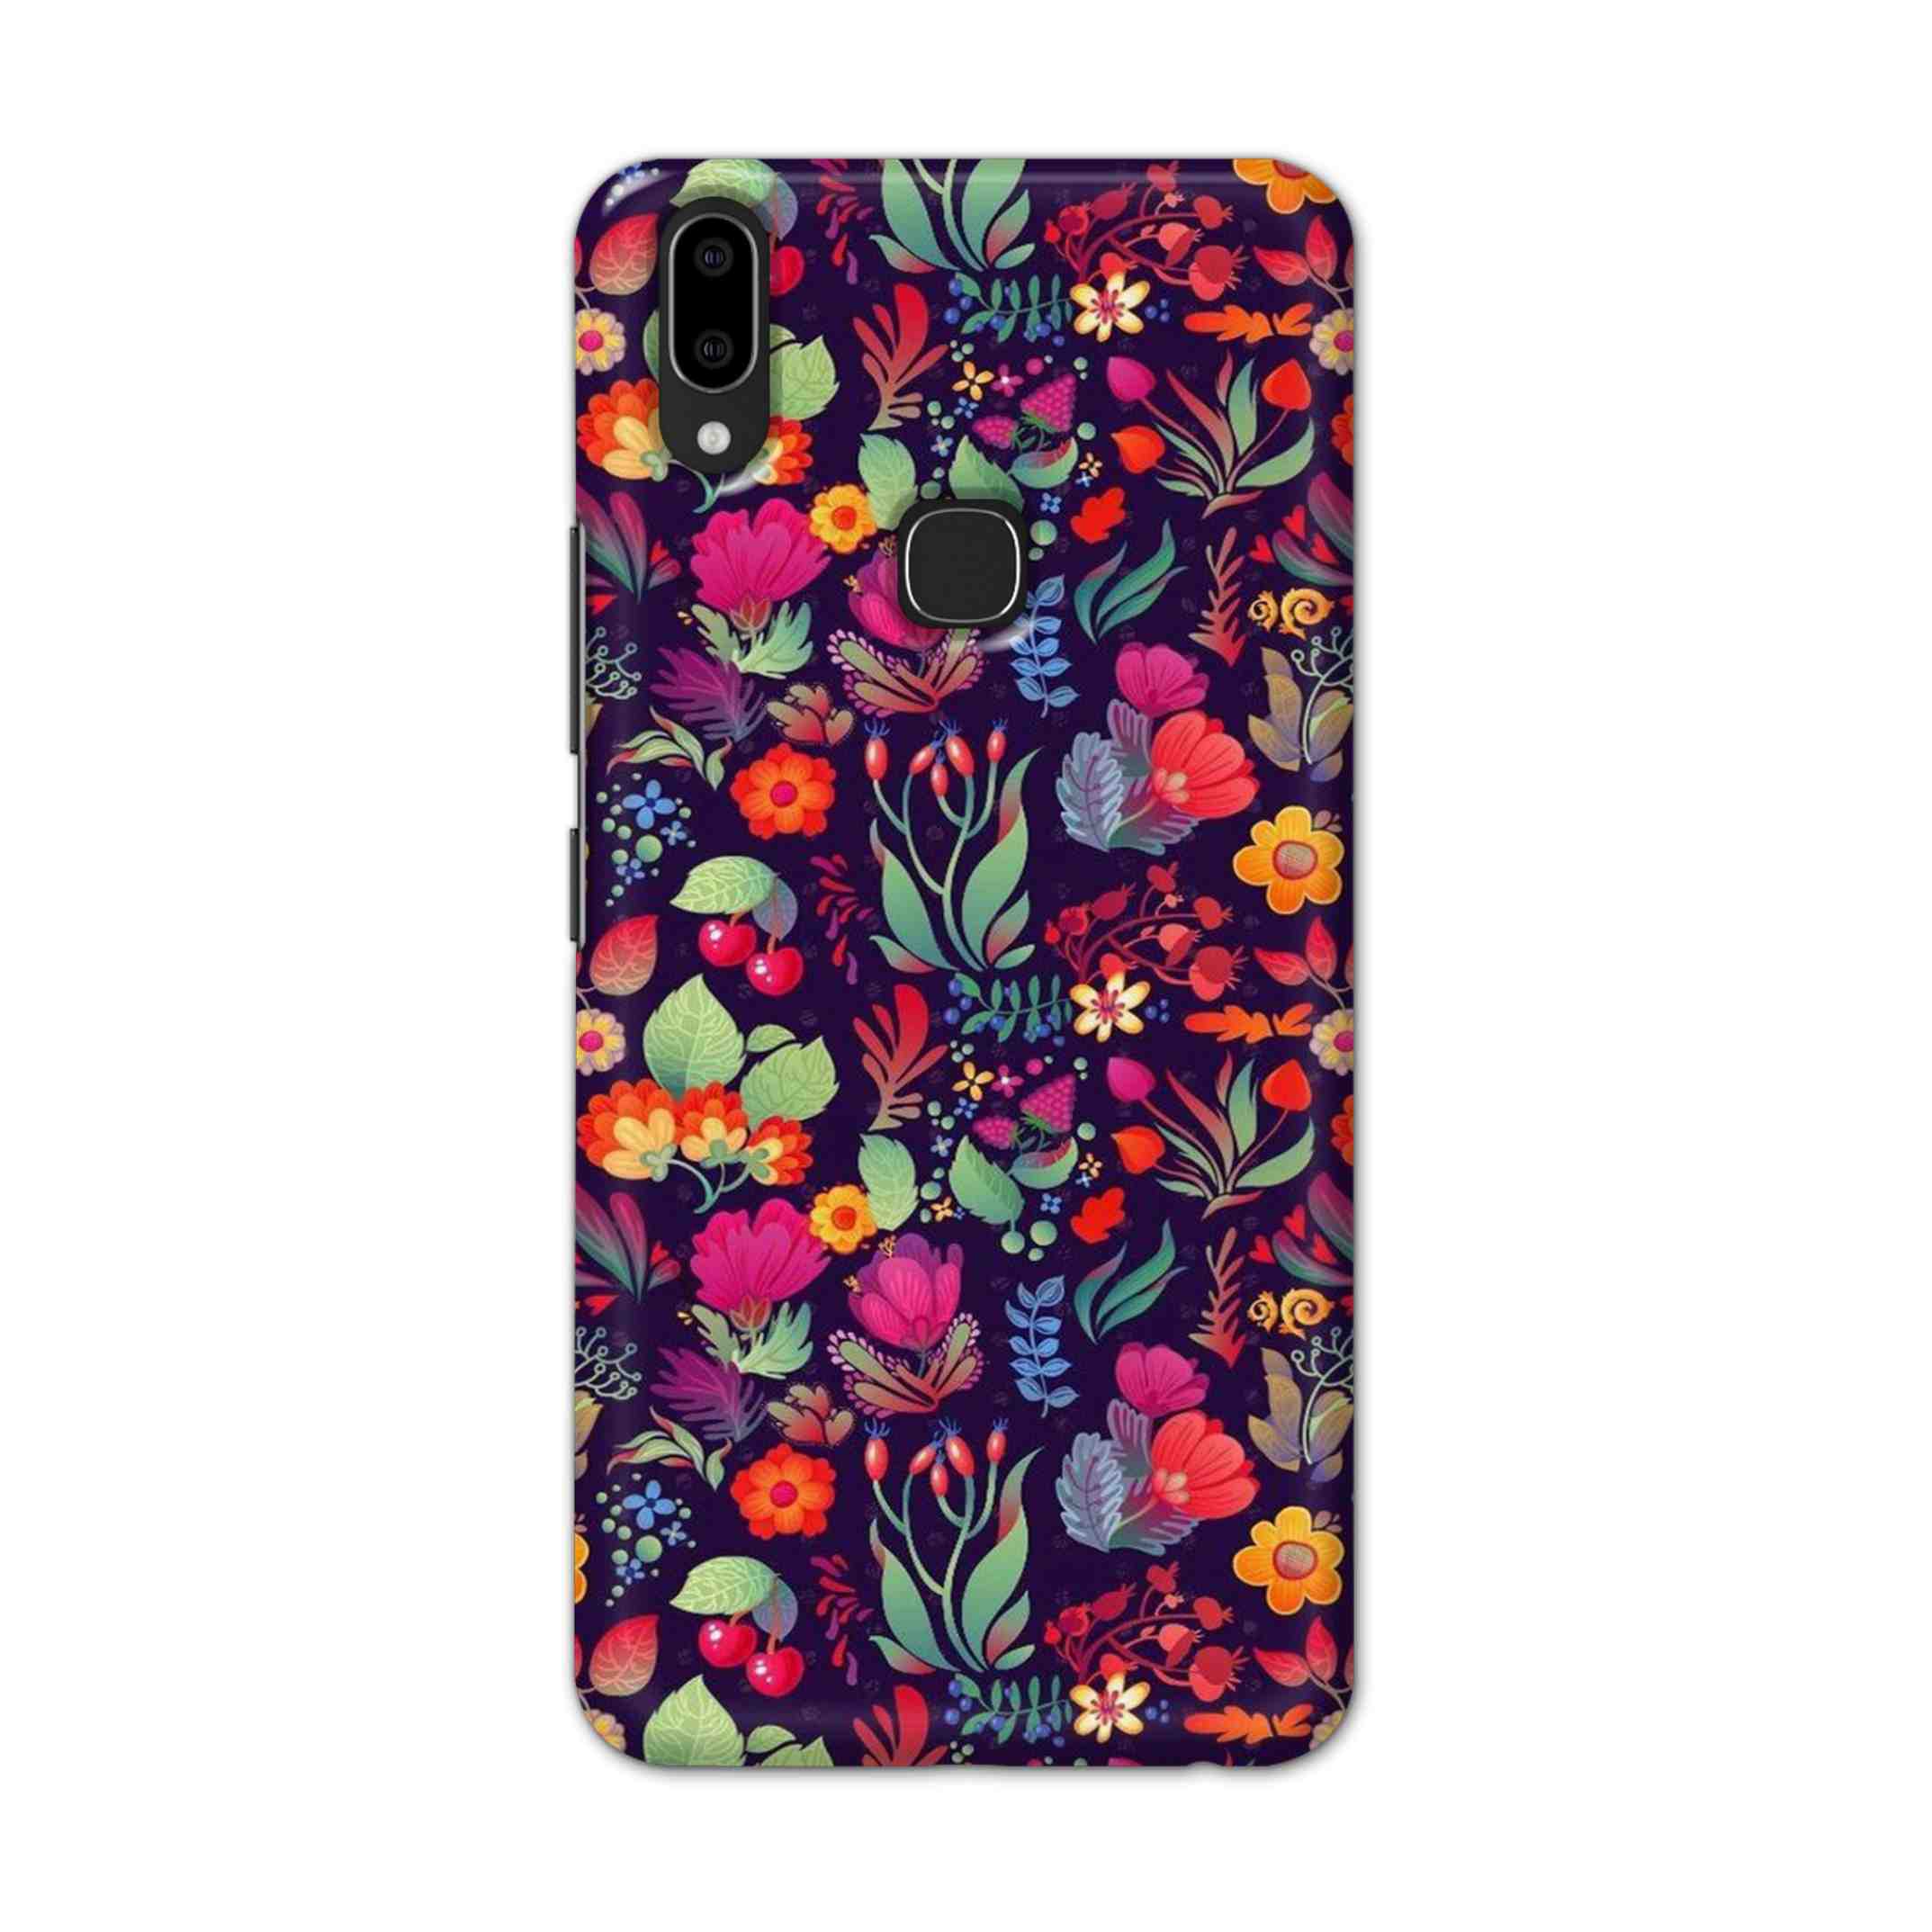 Buy Fruits Flower Hard Back Mobile Phone Case Cover For Vivo V9 / V9 Youth Online